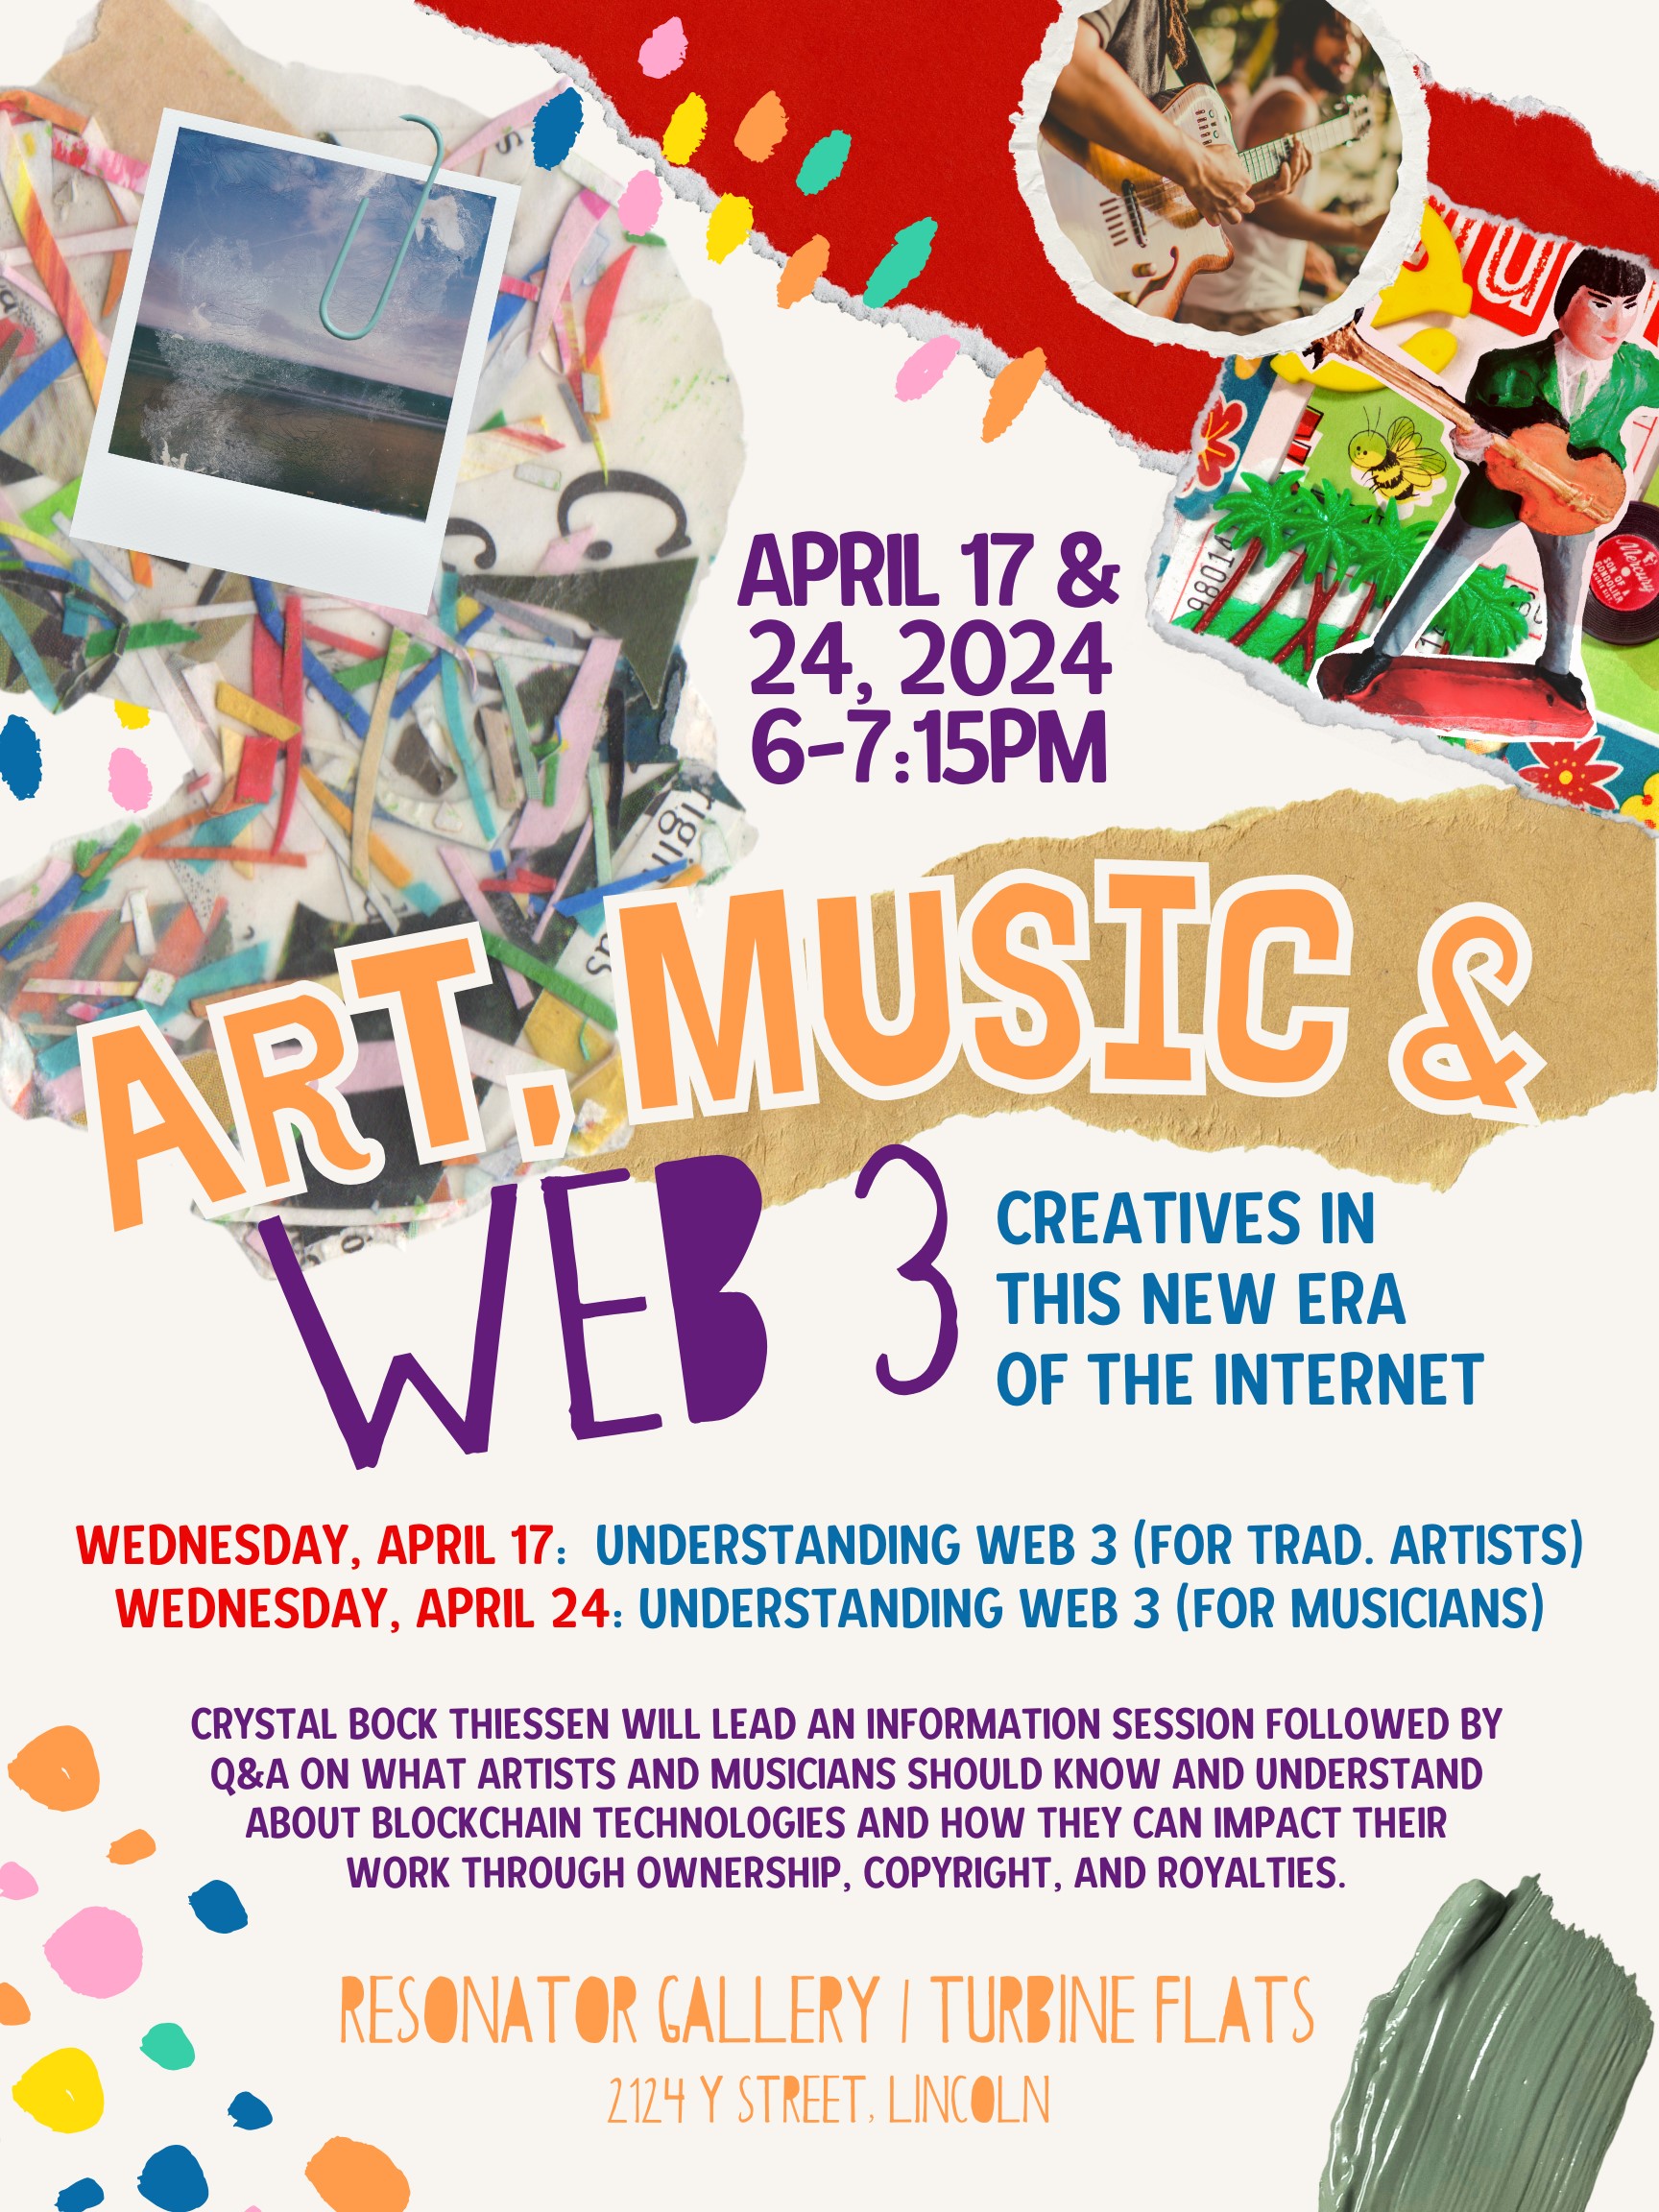 Art Music & Web3